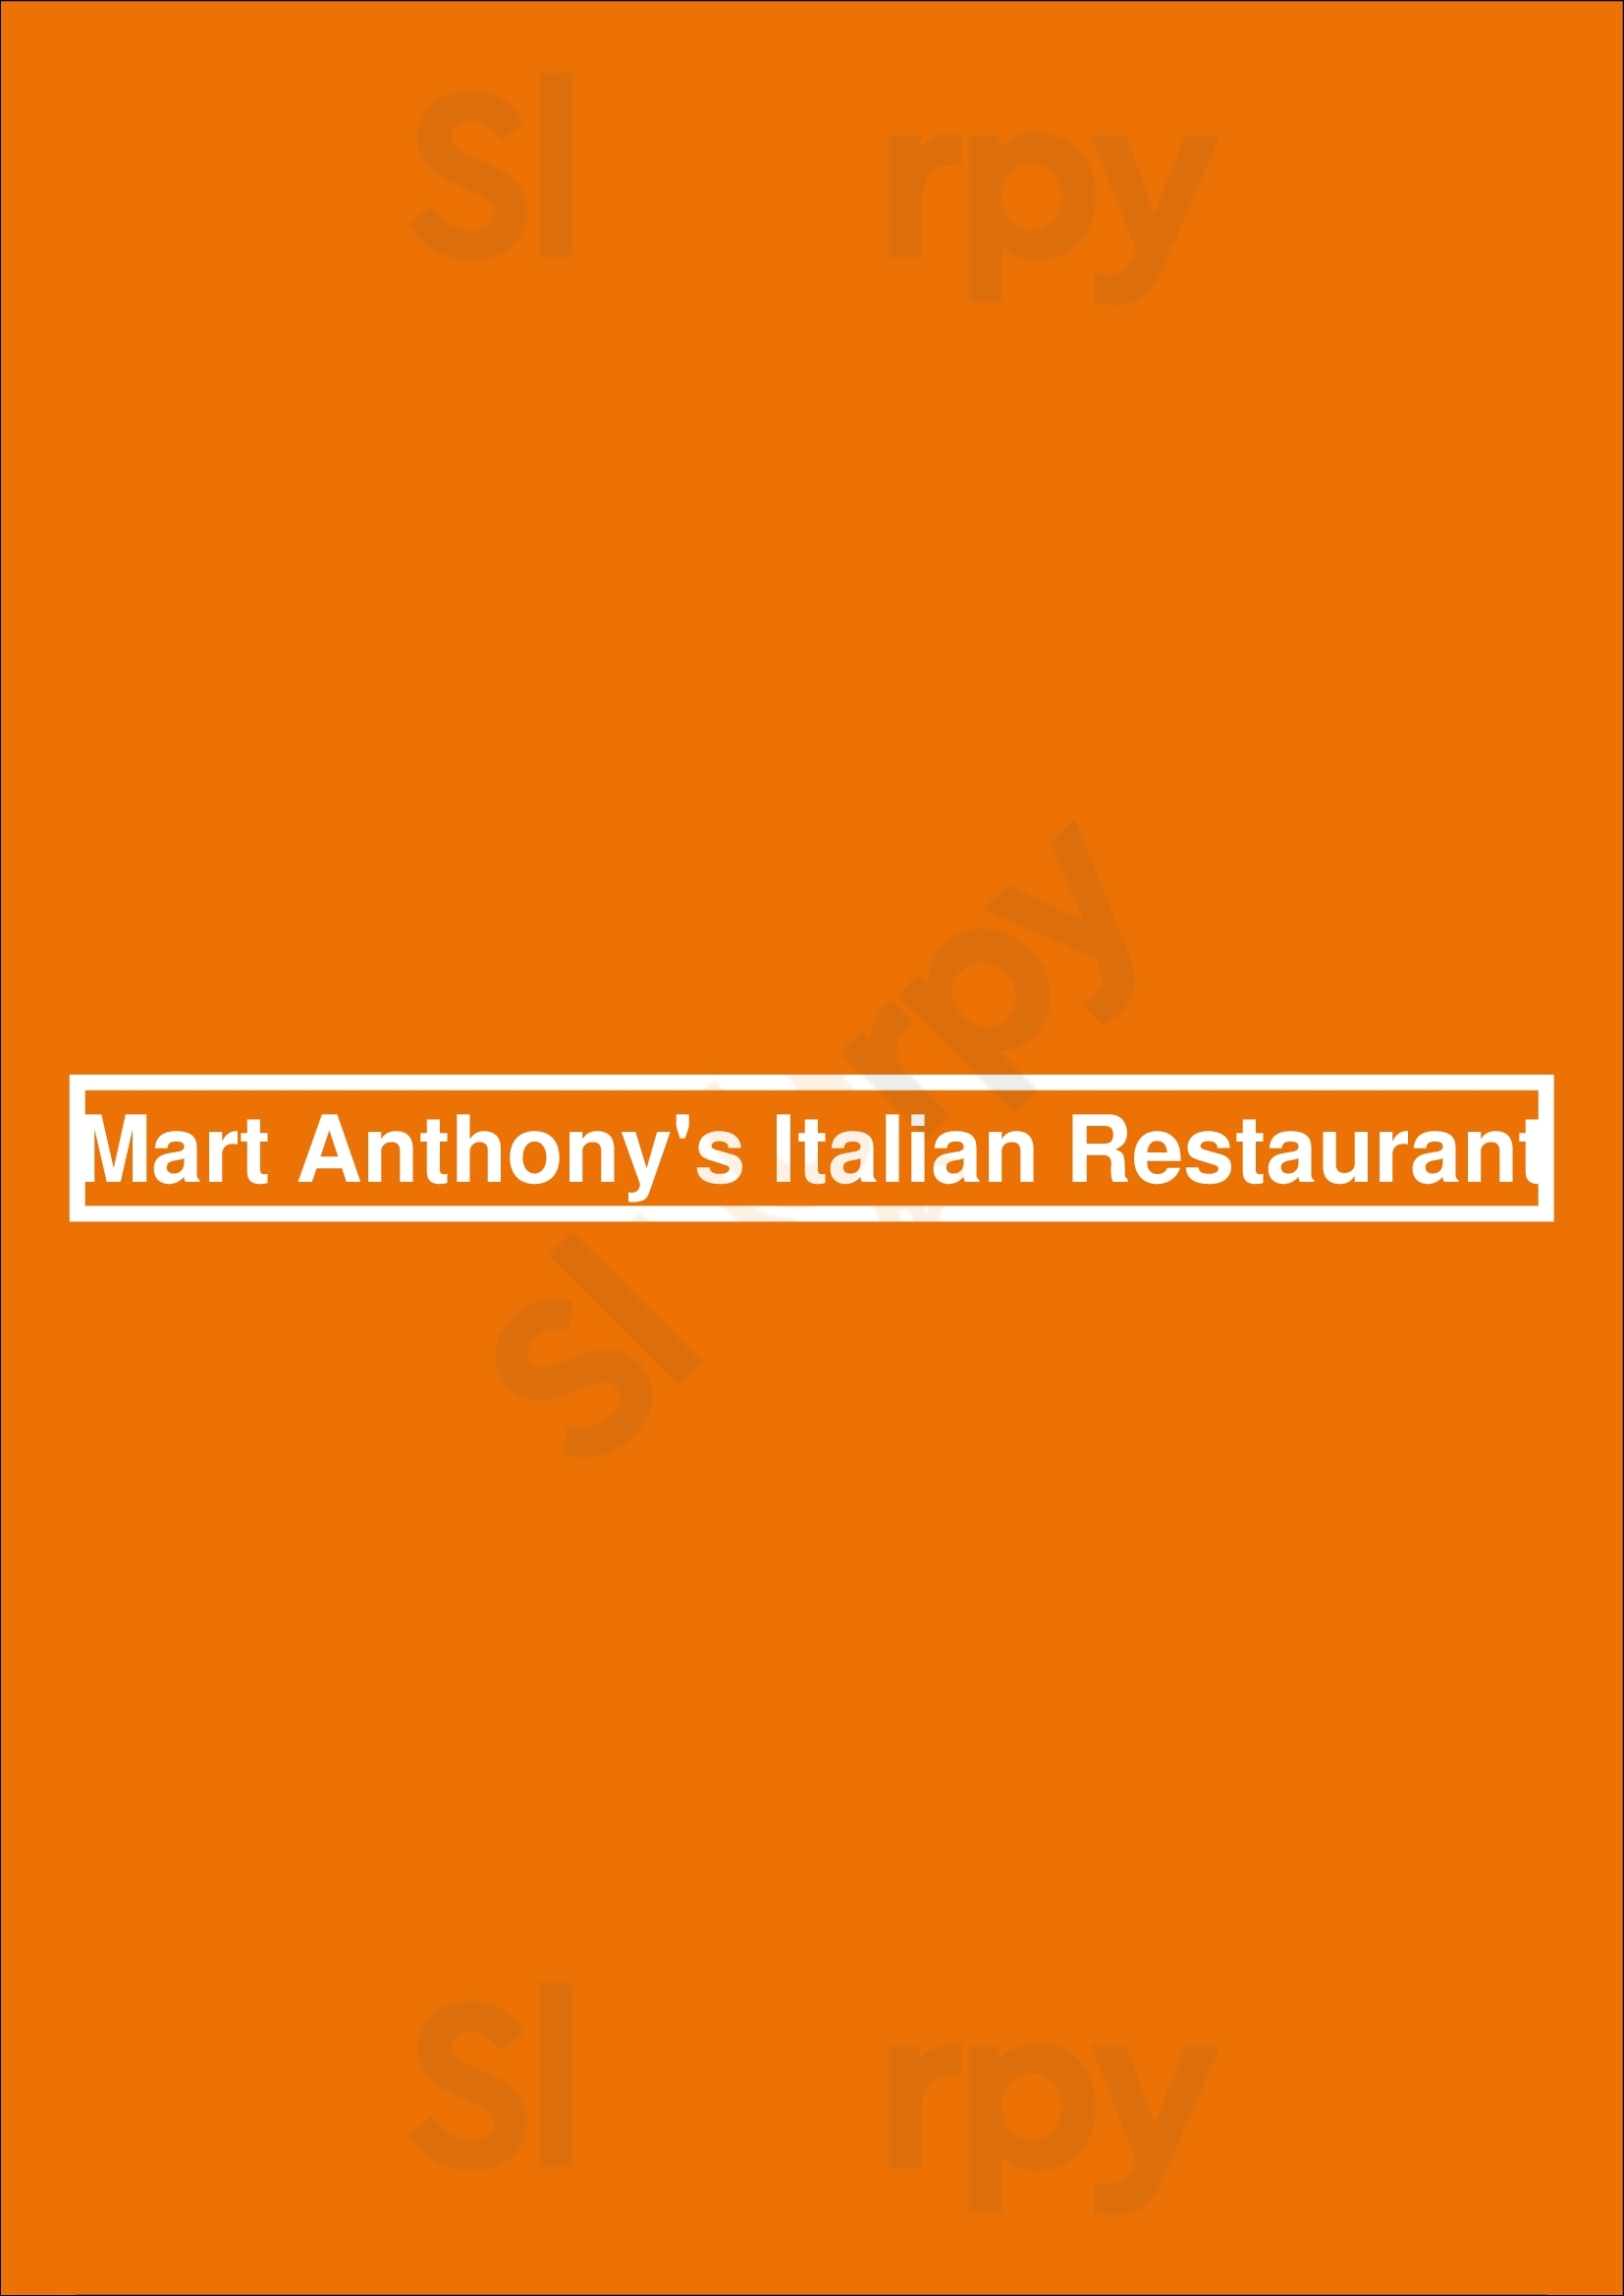 Mart Anthony's Italian Restaurant Chicago Menu - 1